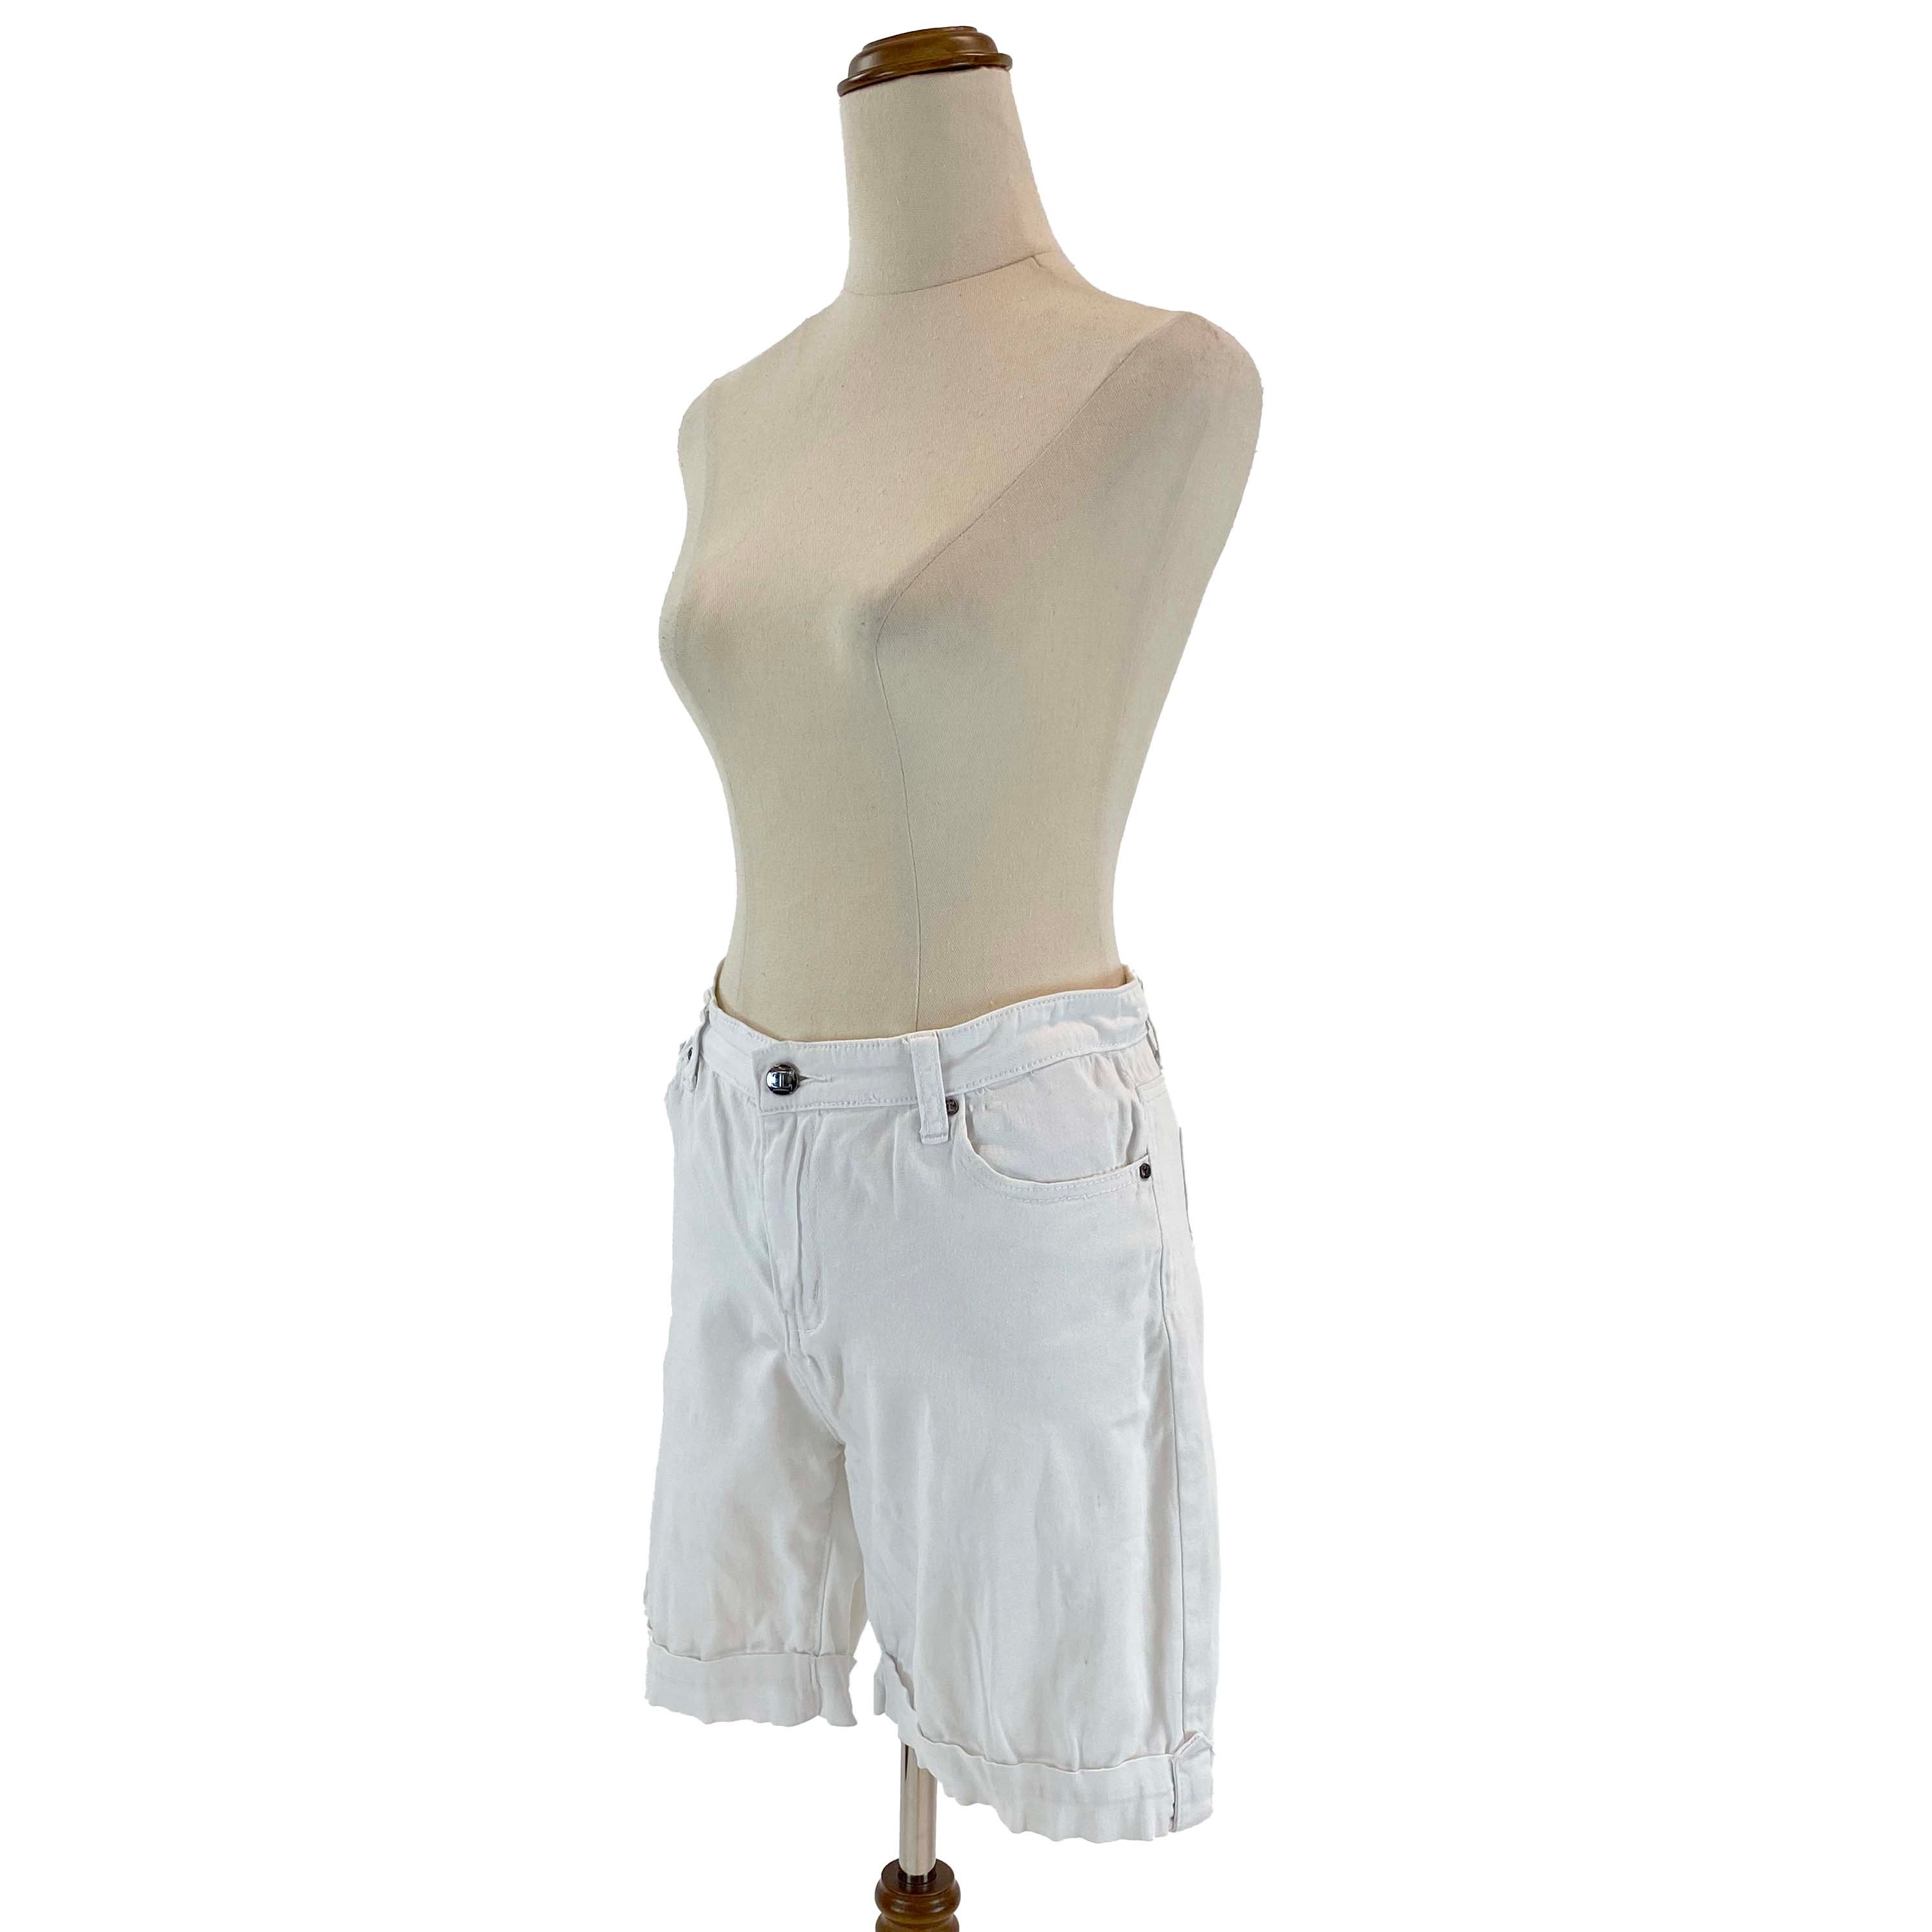 Hermes - White Denim Shorts